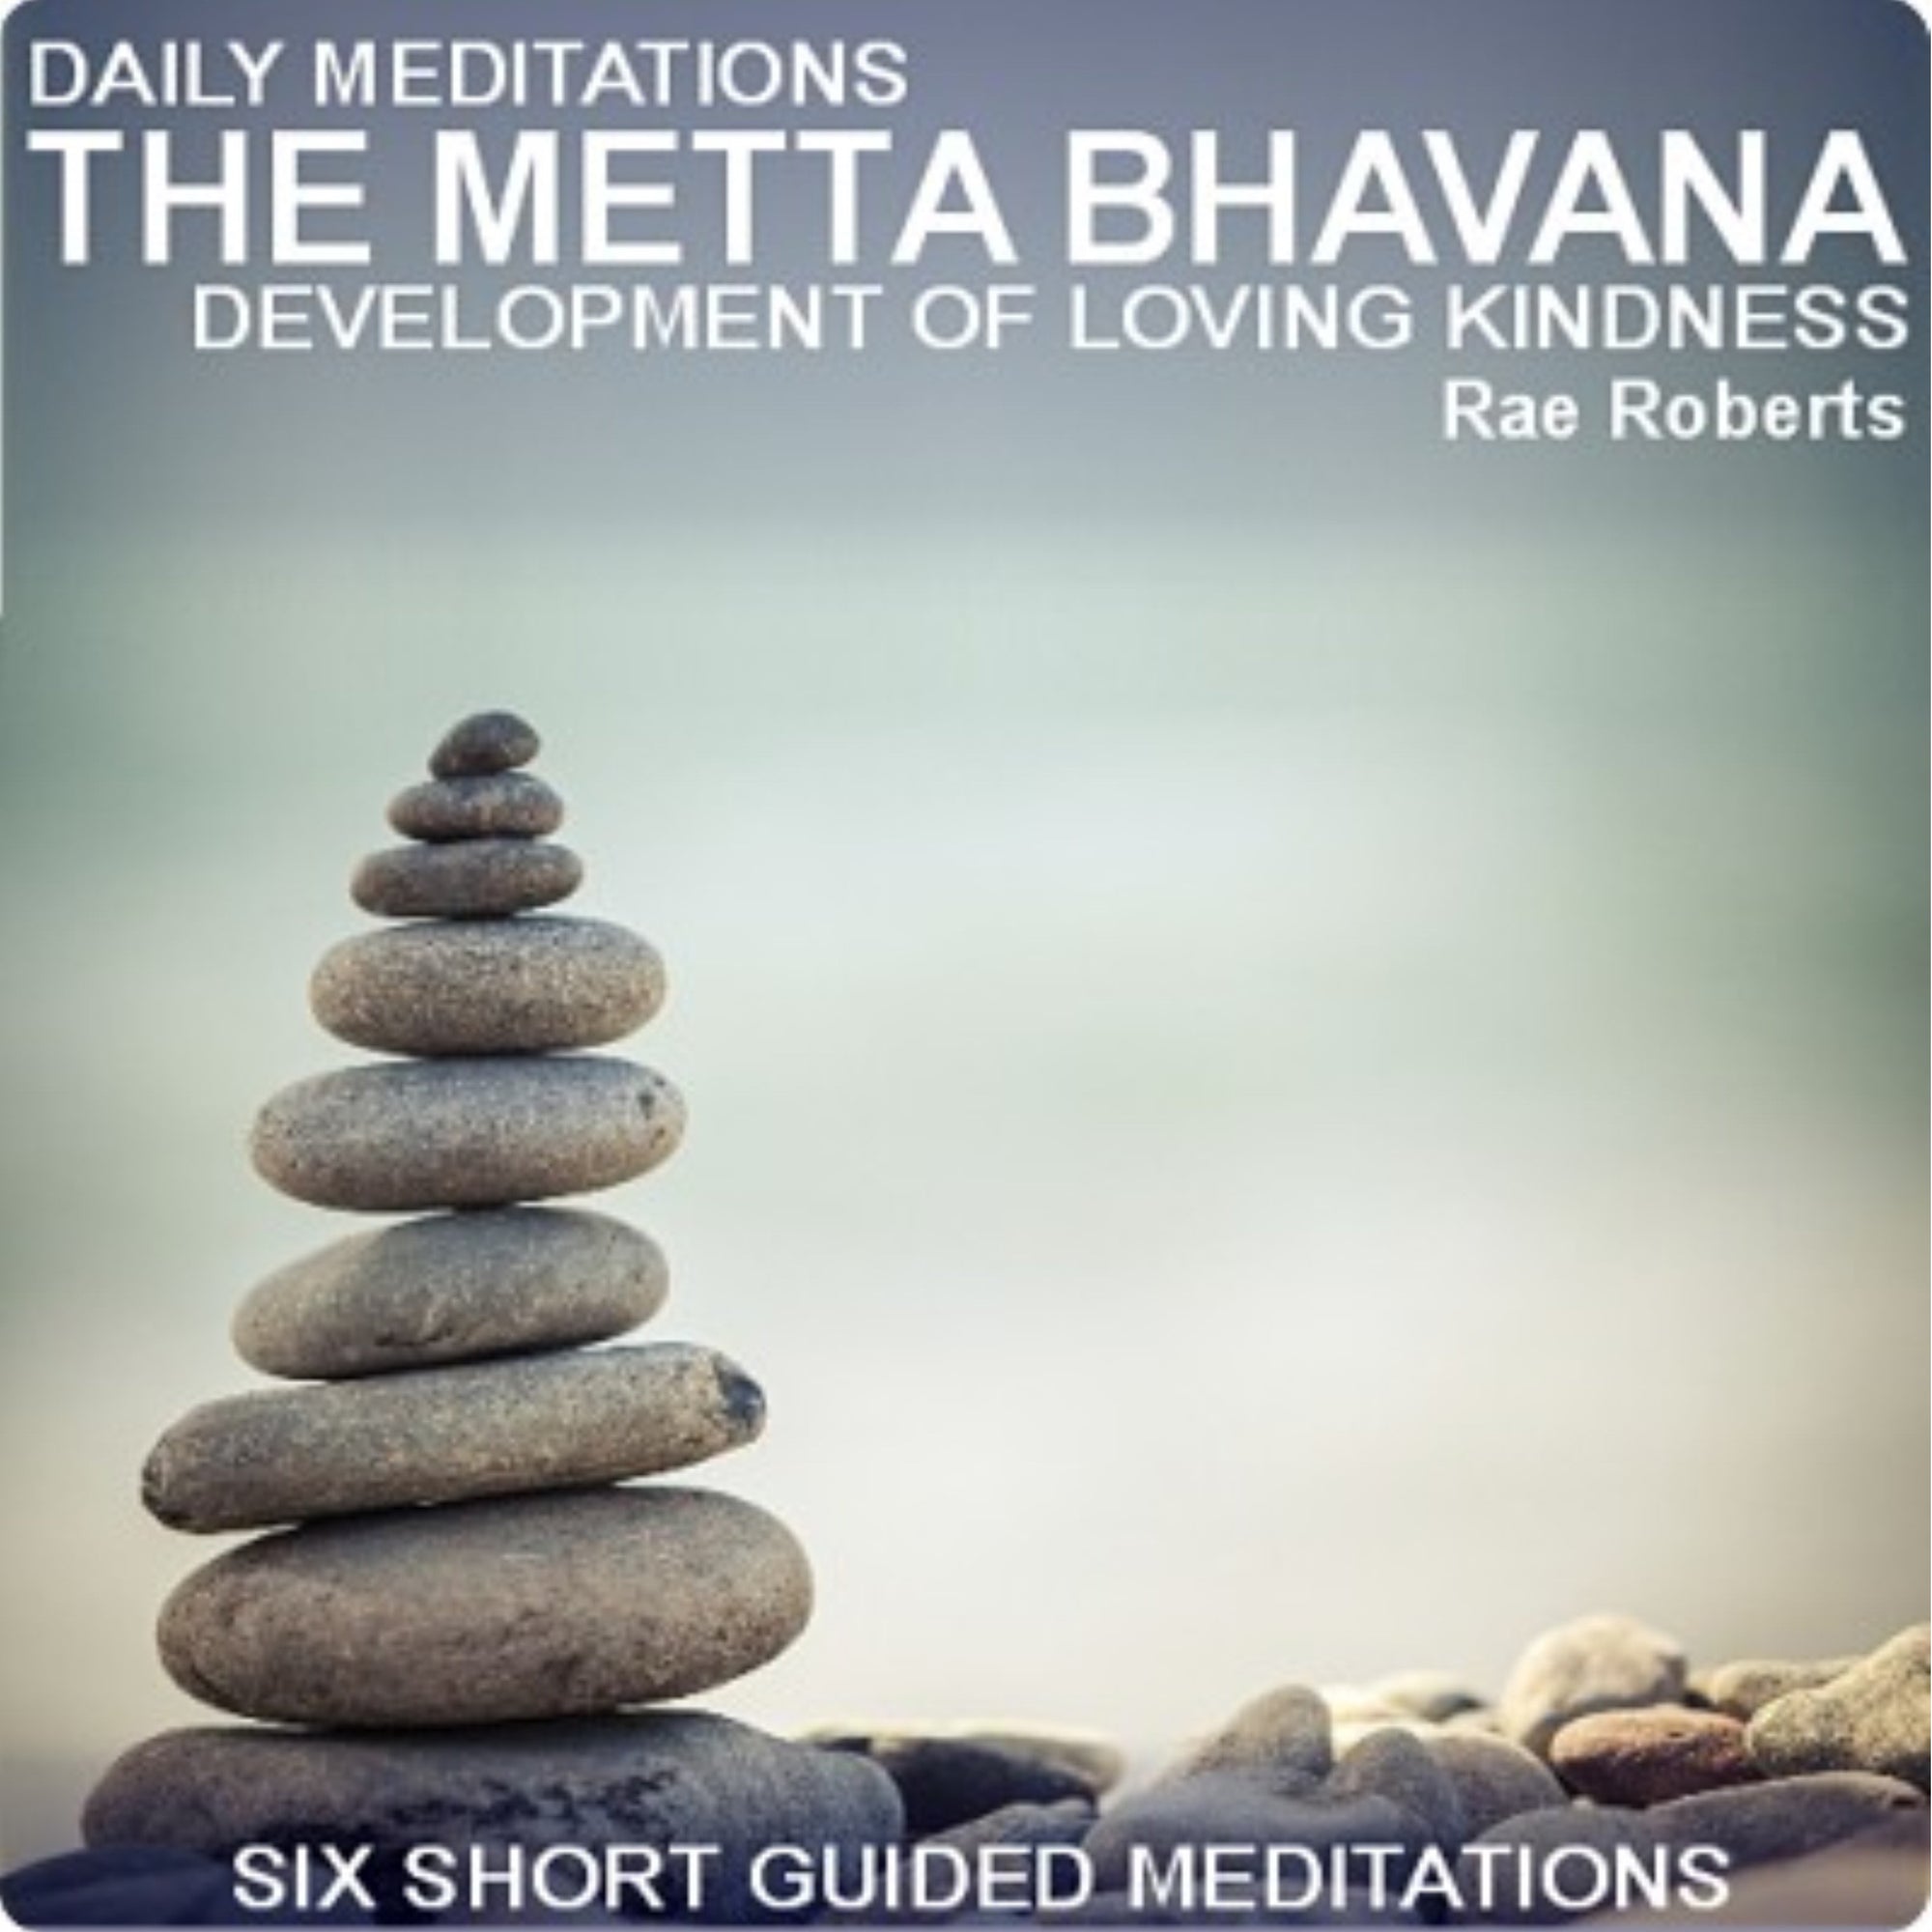 Daily Meditations The Metta Bhavana